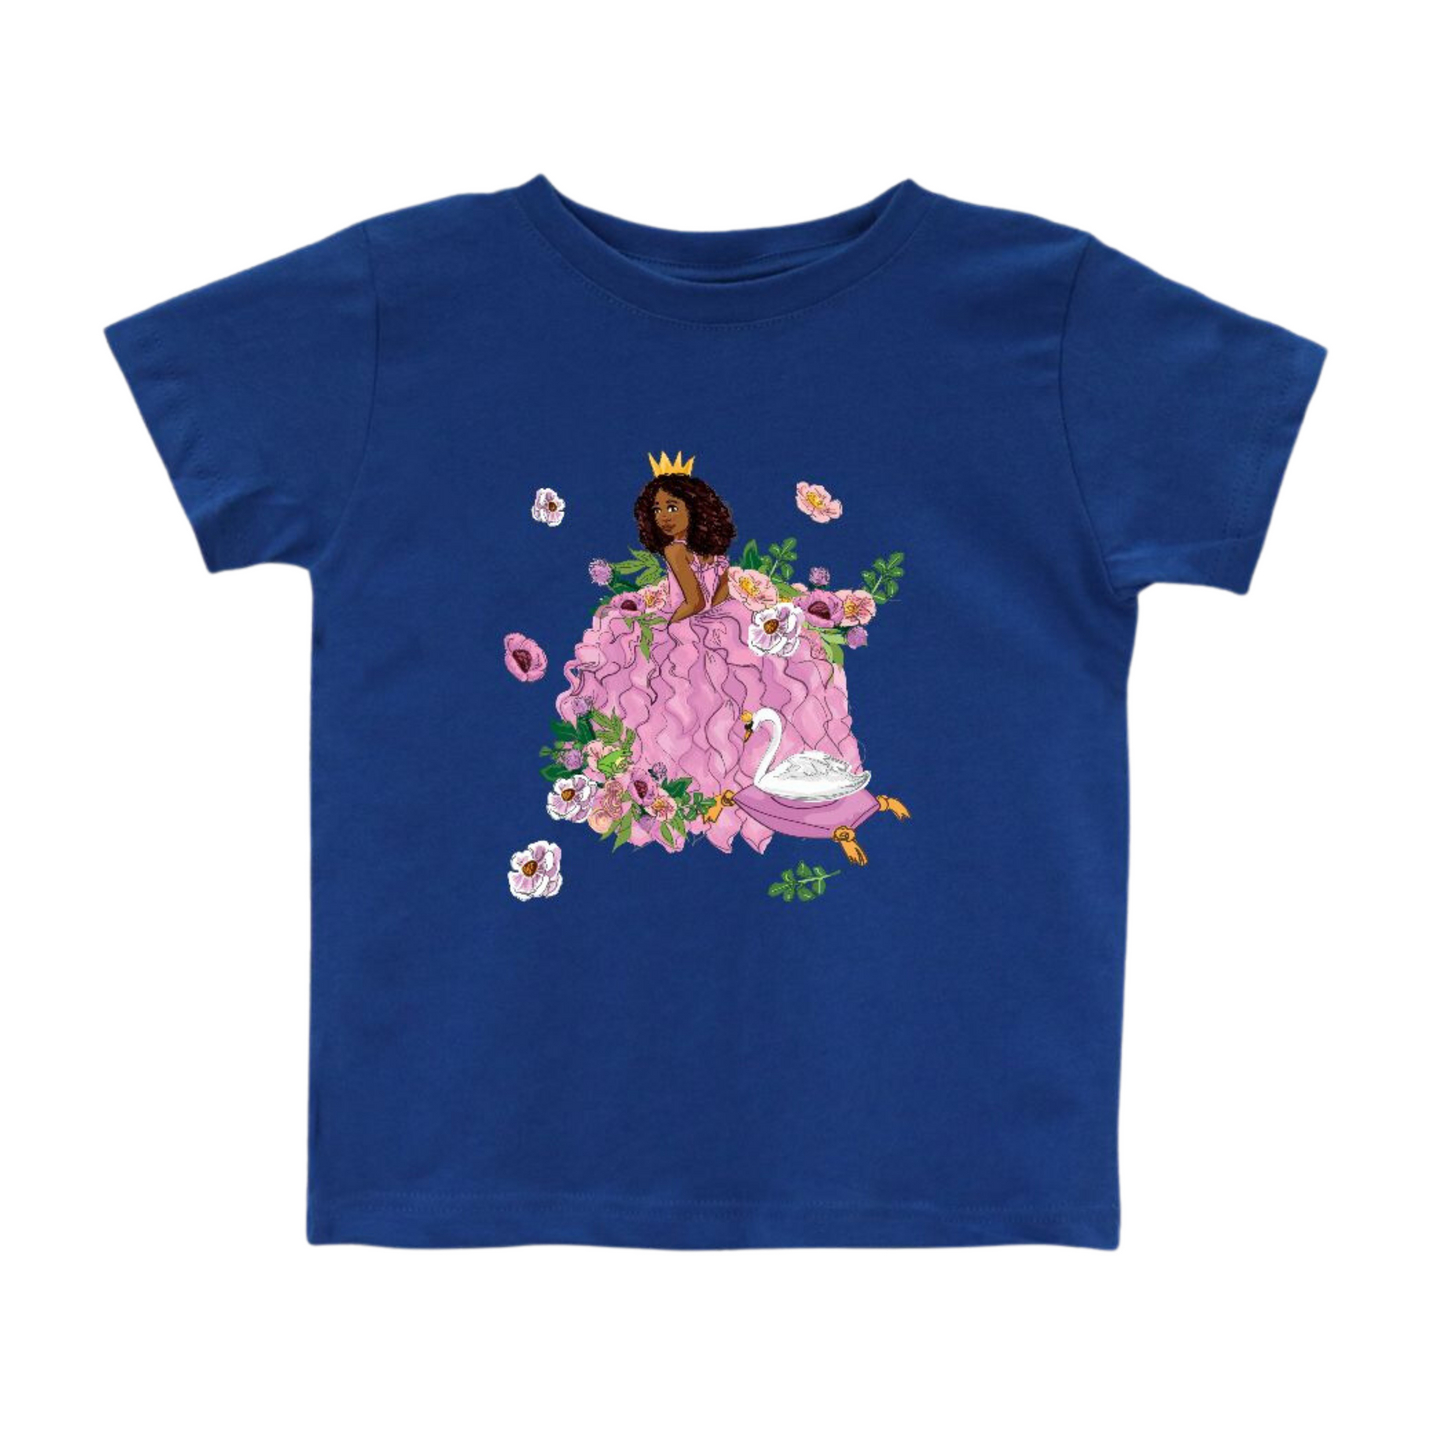 Toddler Black Princess Graphic Tee Shirt | (2T-5T)